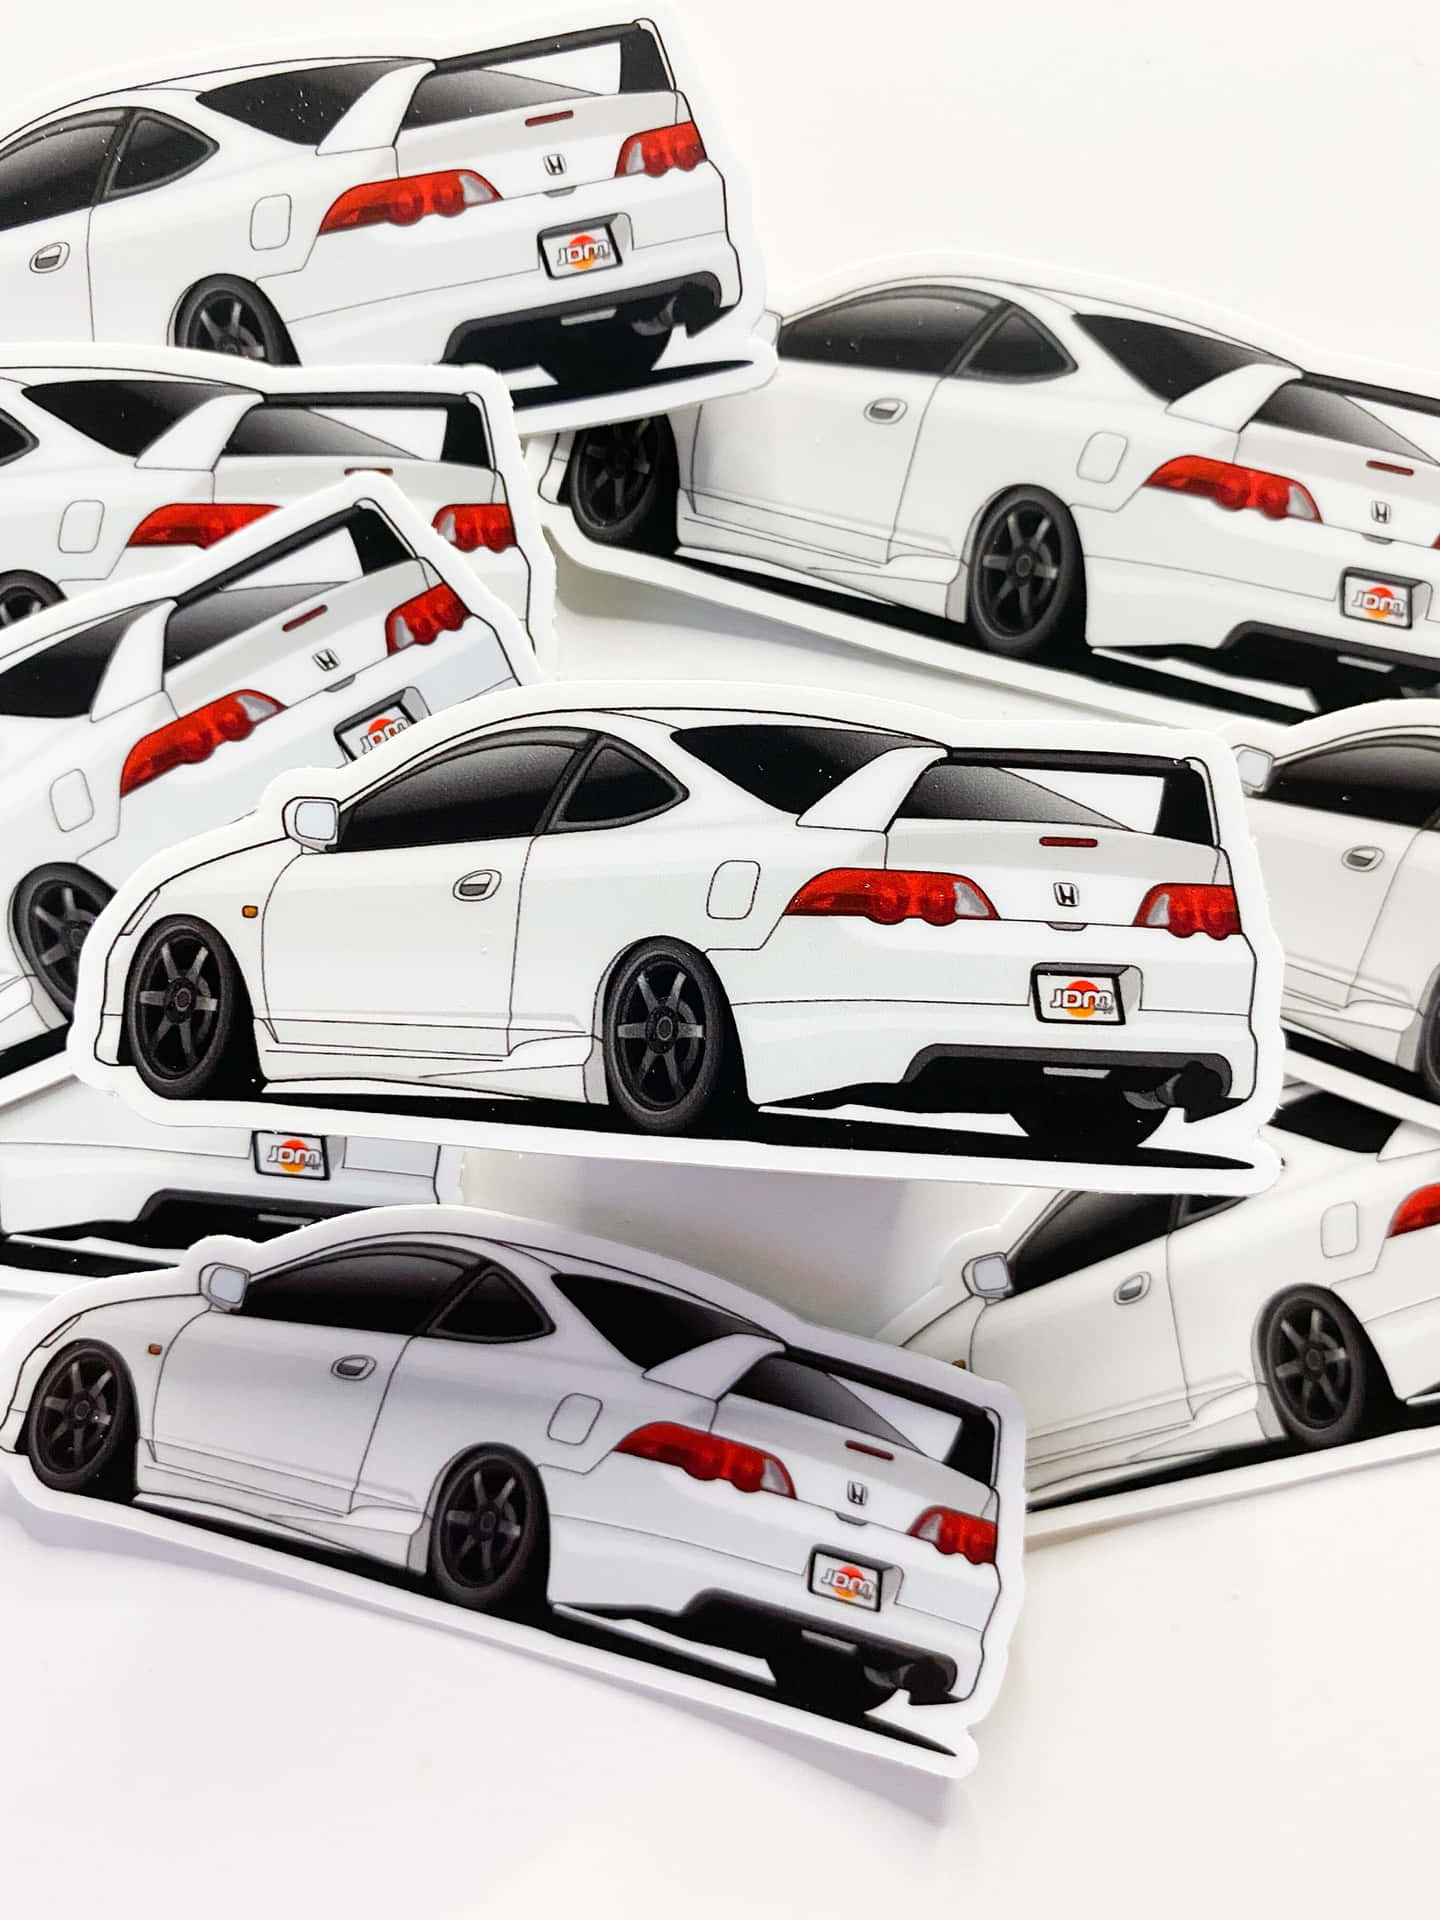 Sleek Acura RSX sports car in a stunning urban setting Wallpaper